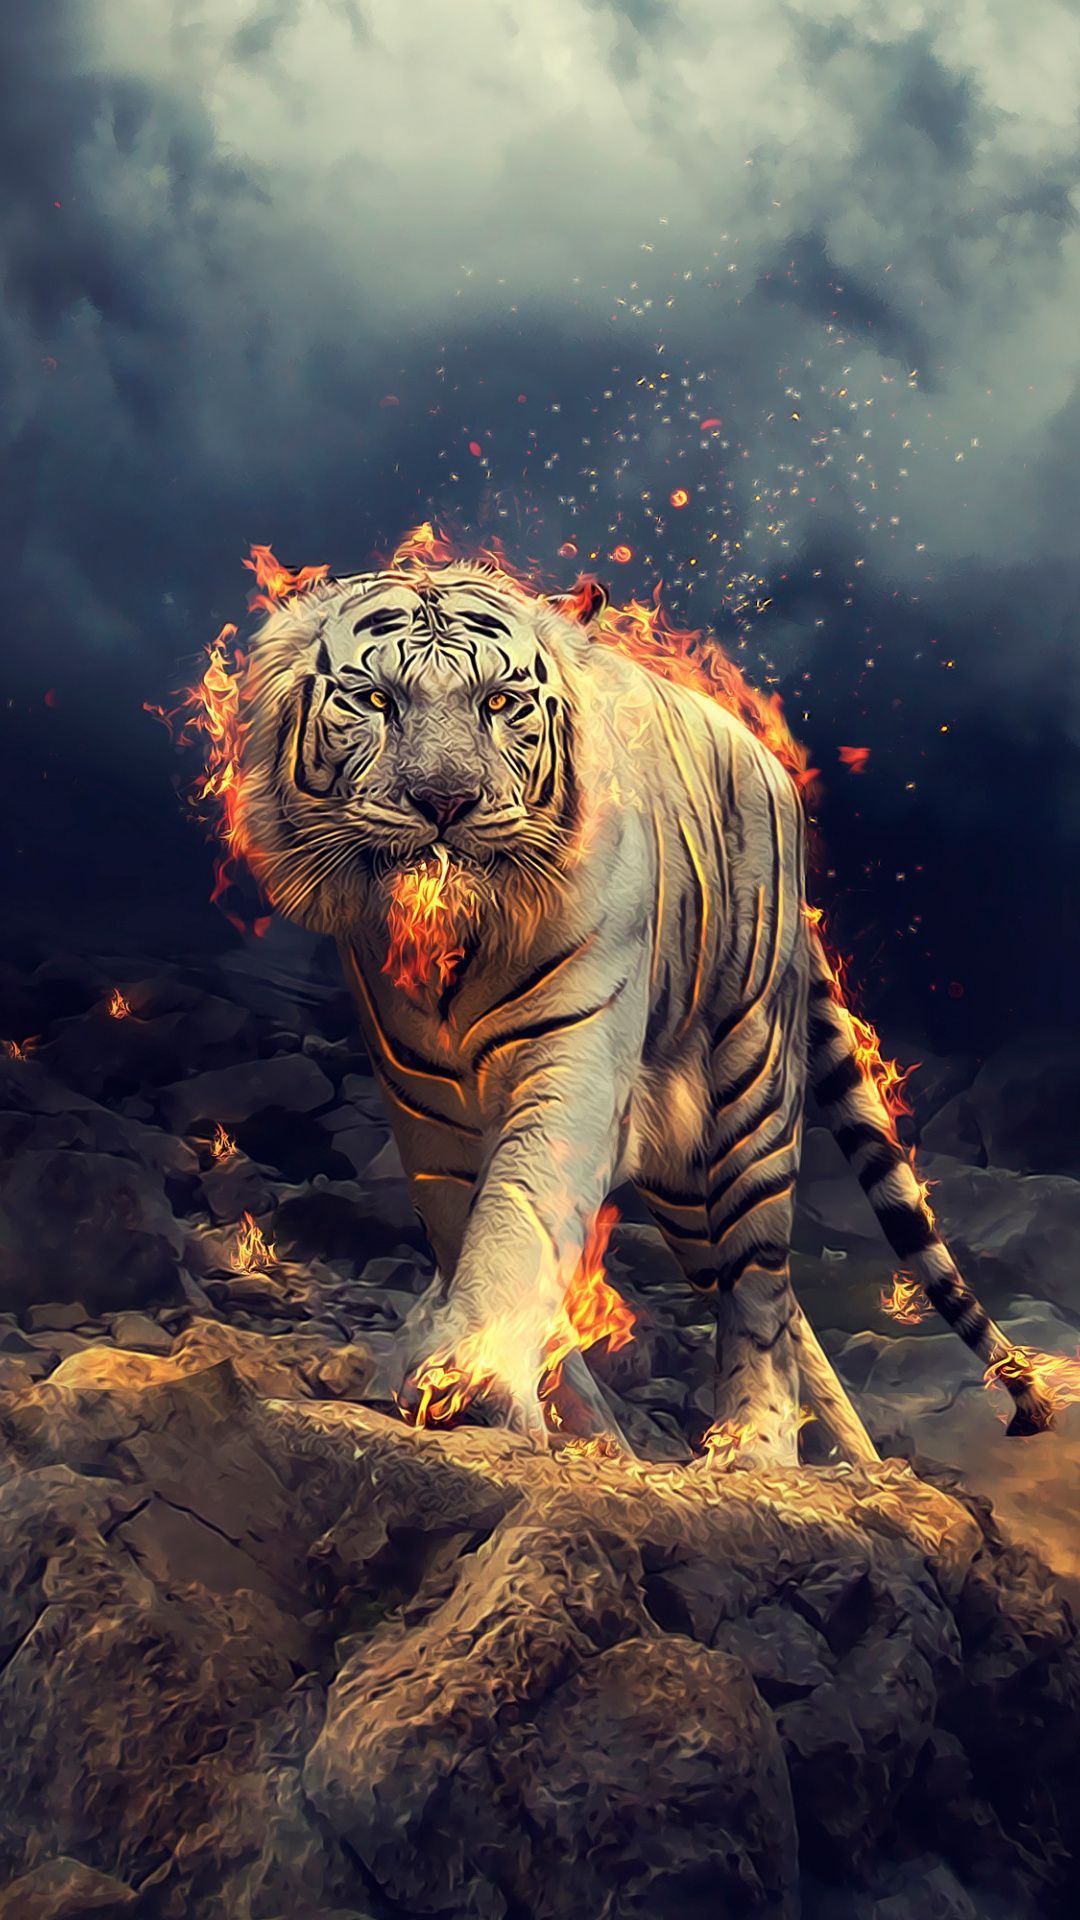 Angry, raging, white tiger, 1080x1920 wallpaper. Tiger wallpaper